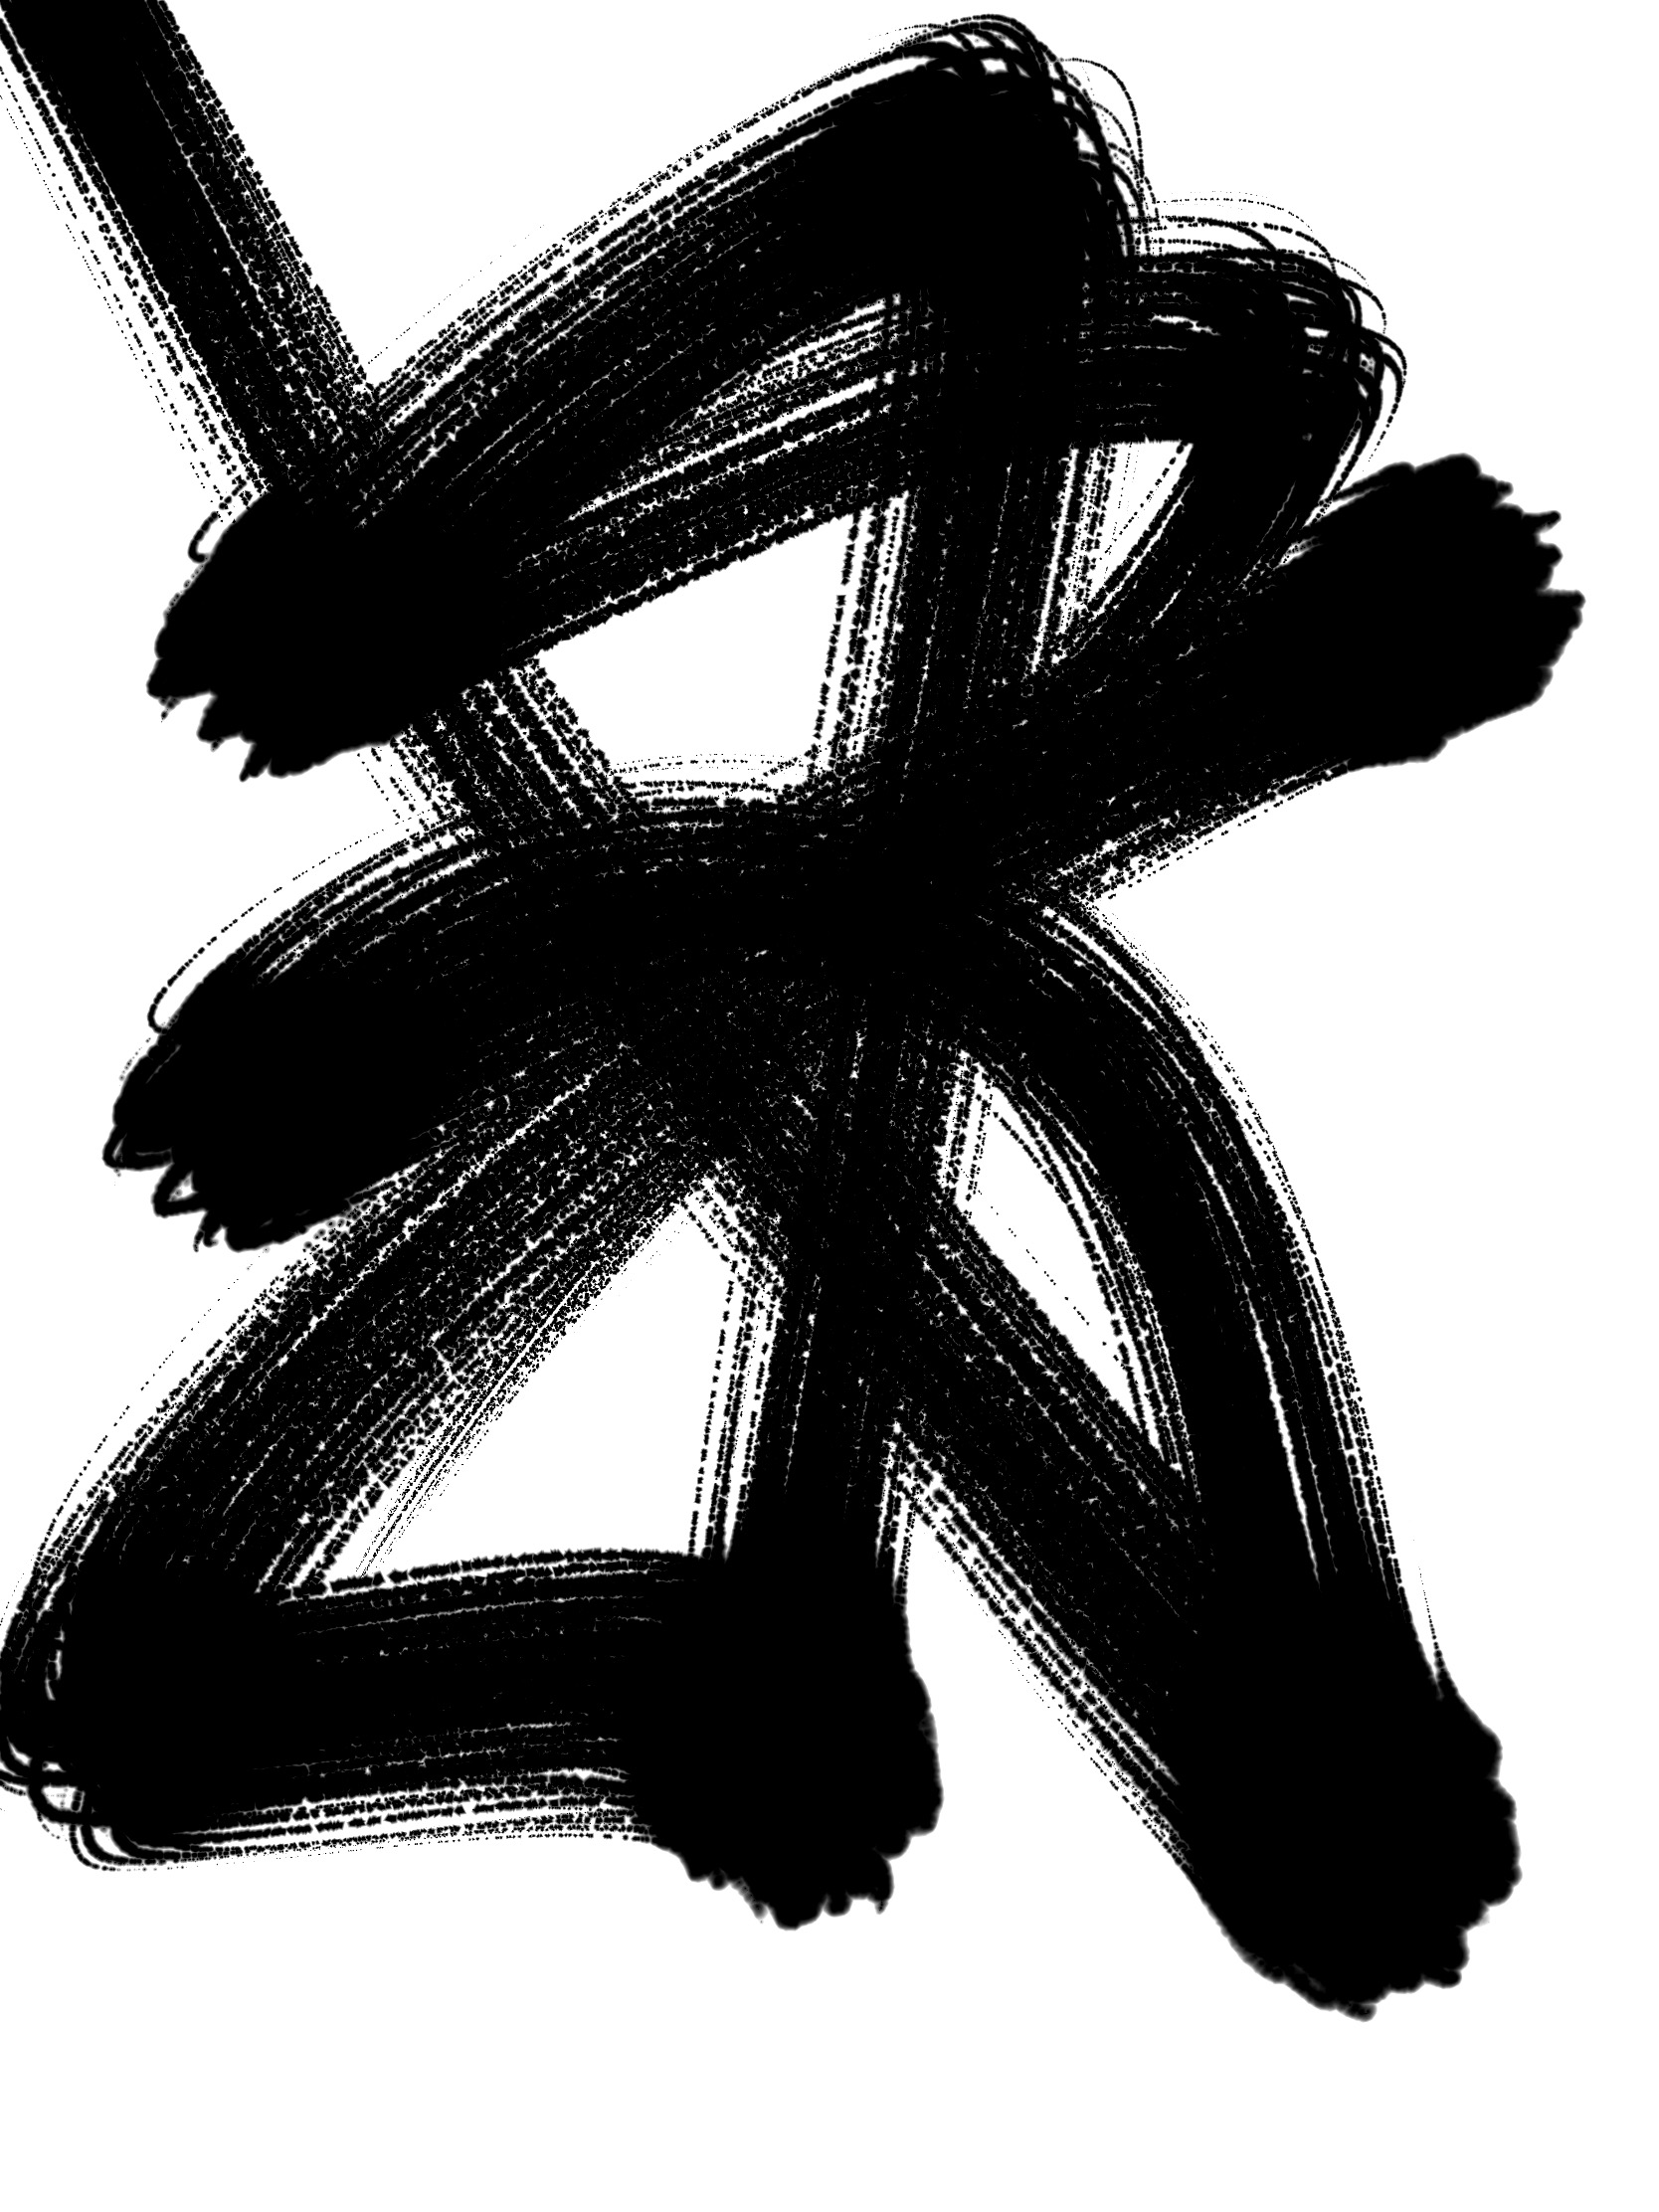 ERIC KIM zen calligraphy aesthetics